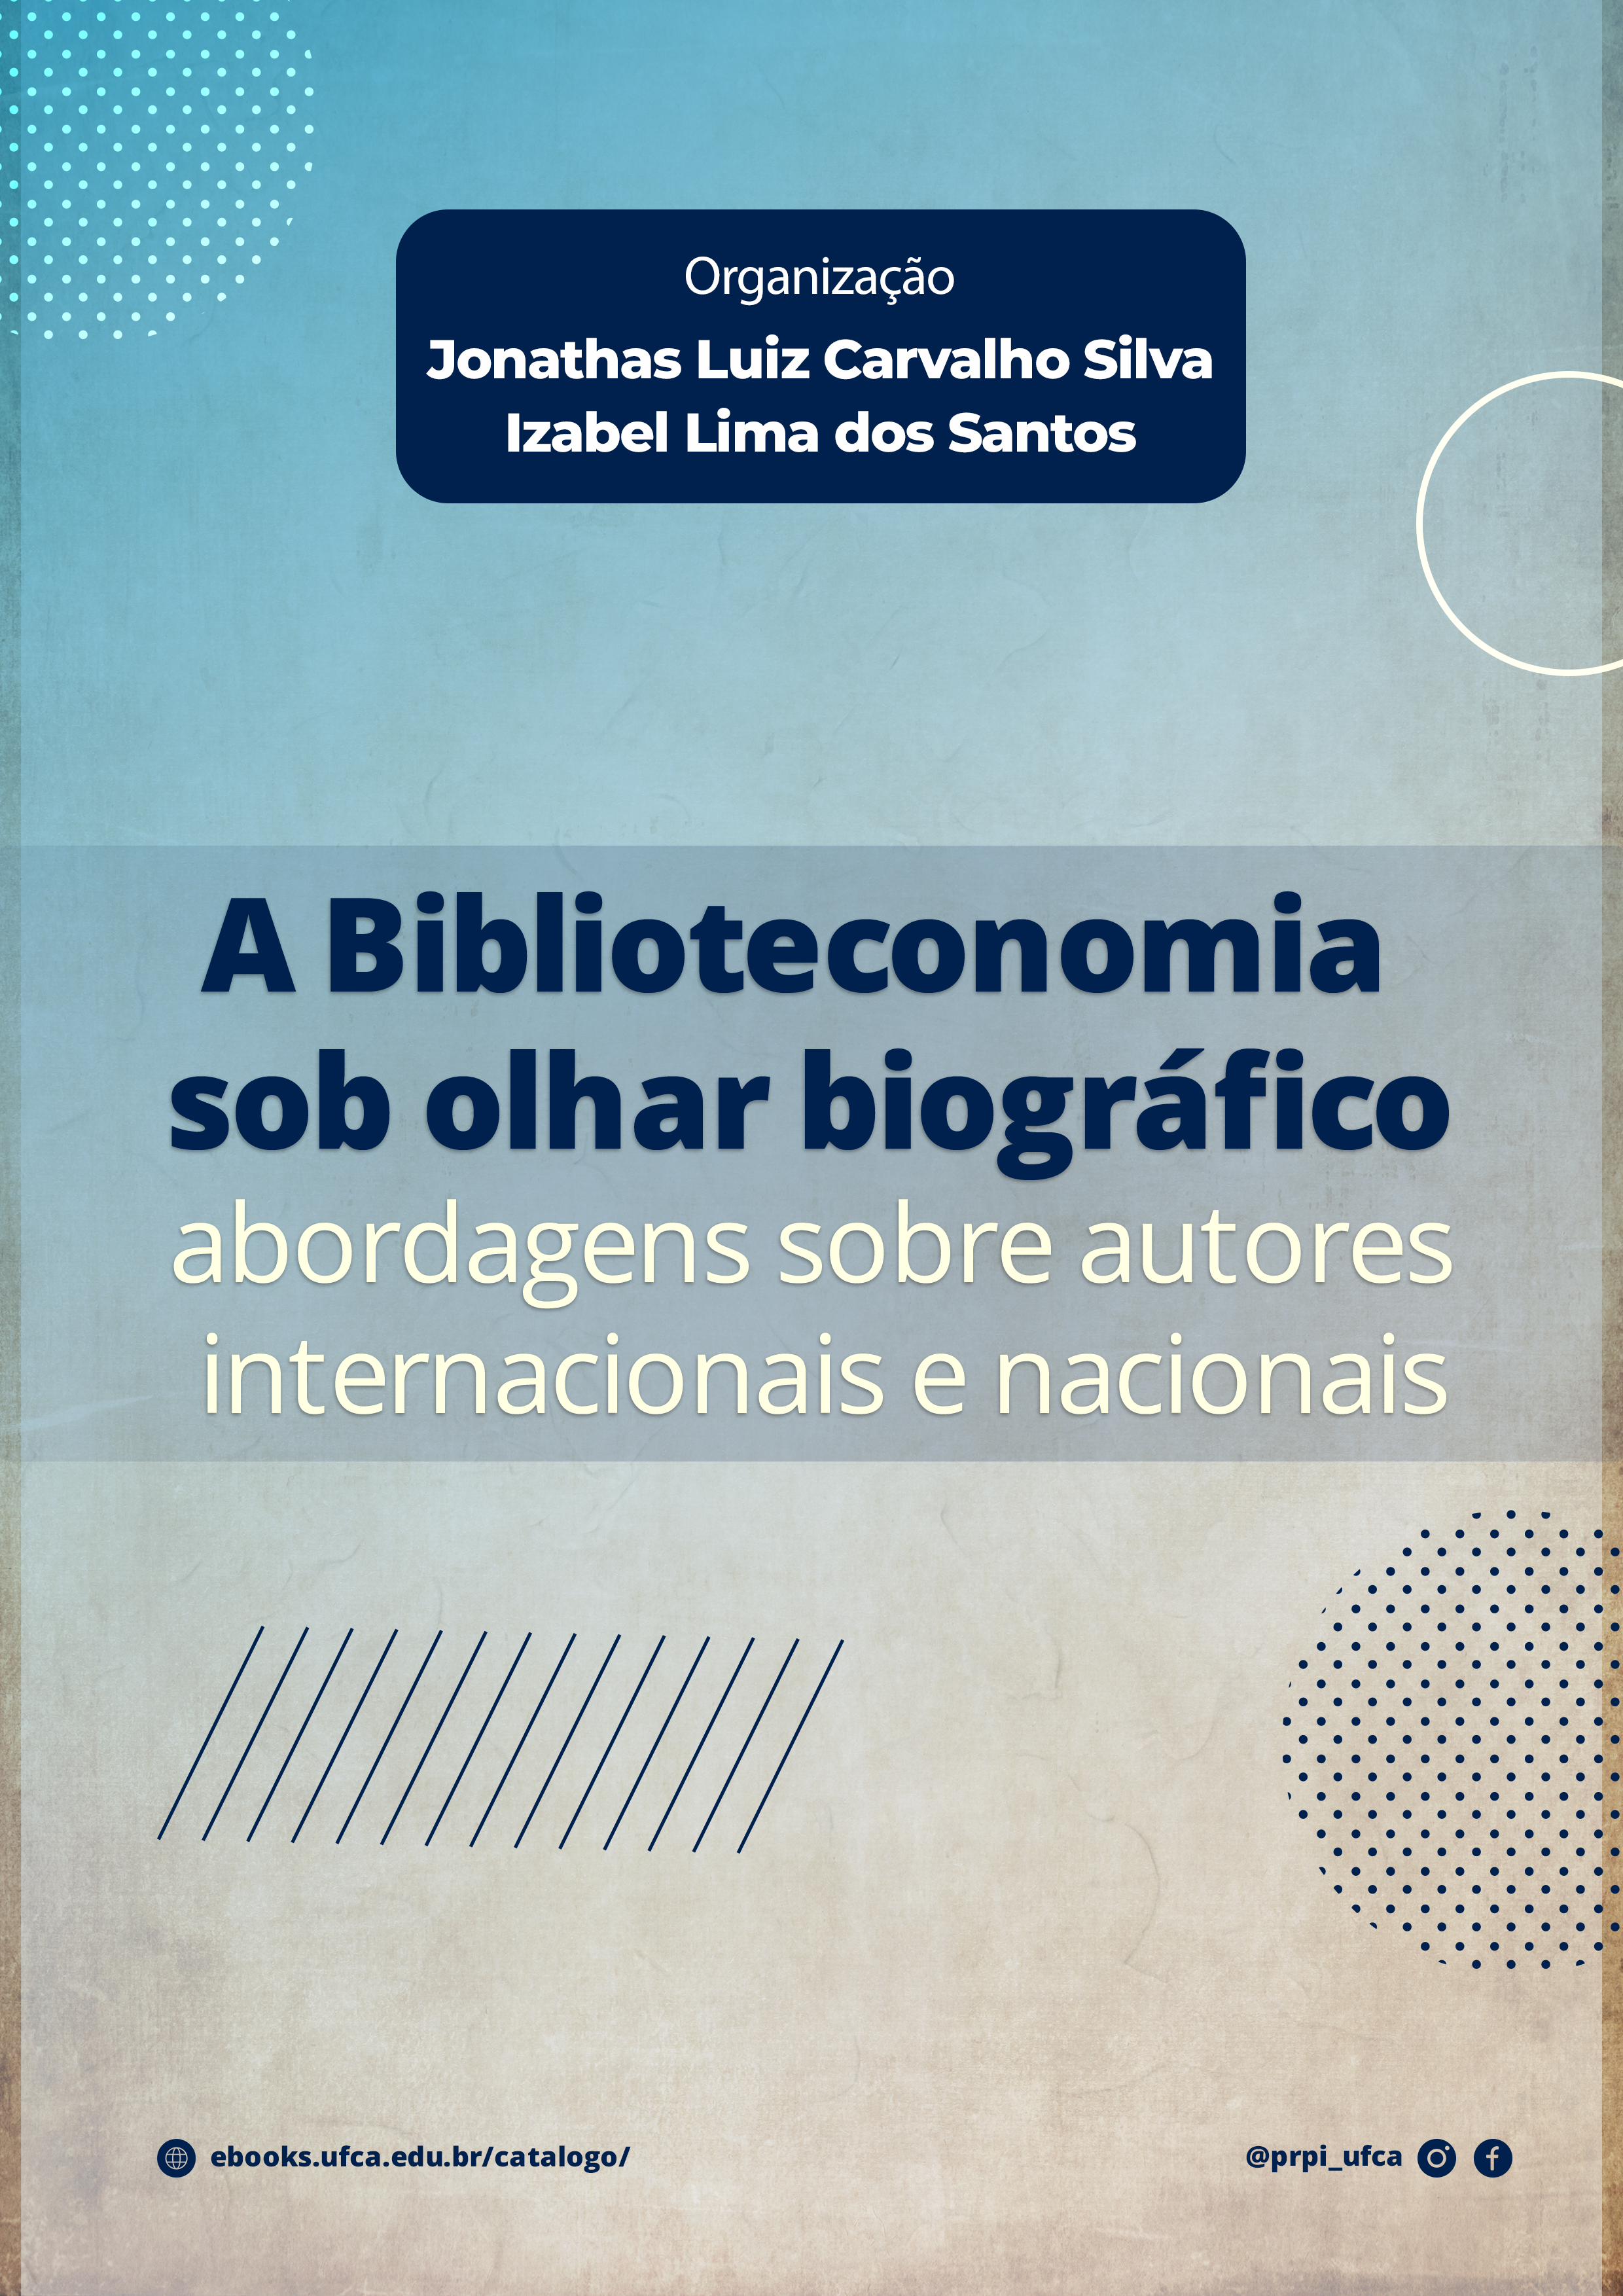 A Biblioteconomia sob olhar biográfico: abordagens sobre autores internacionais e nacionais thumbnail